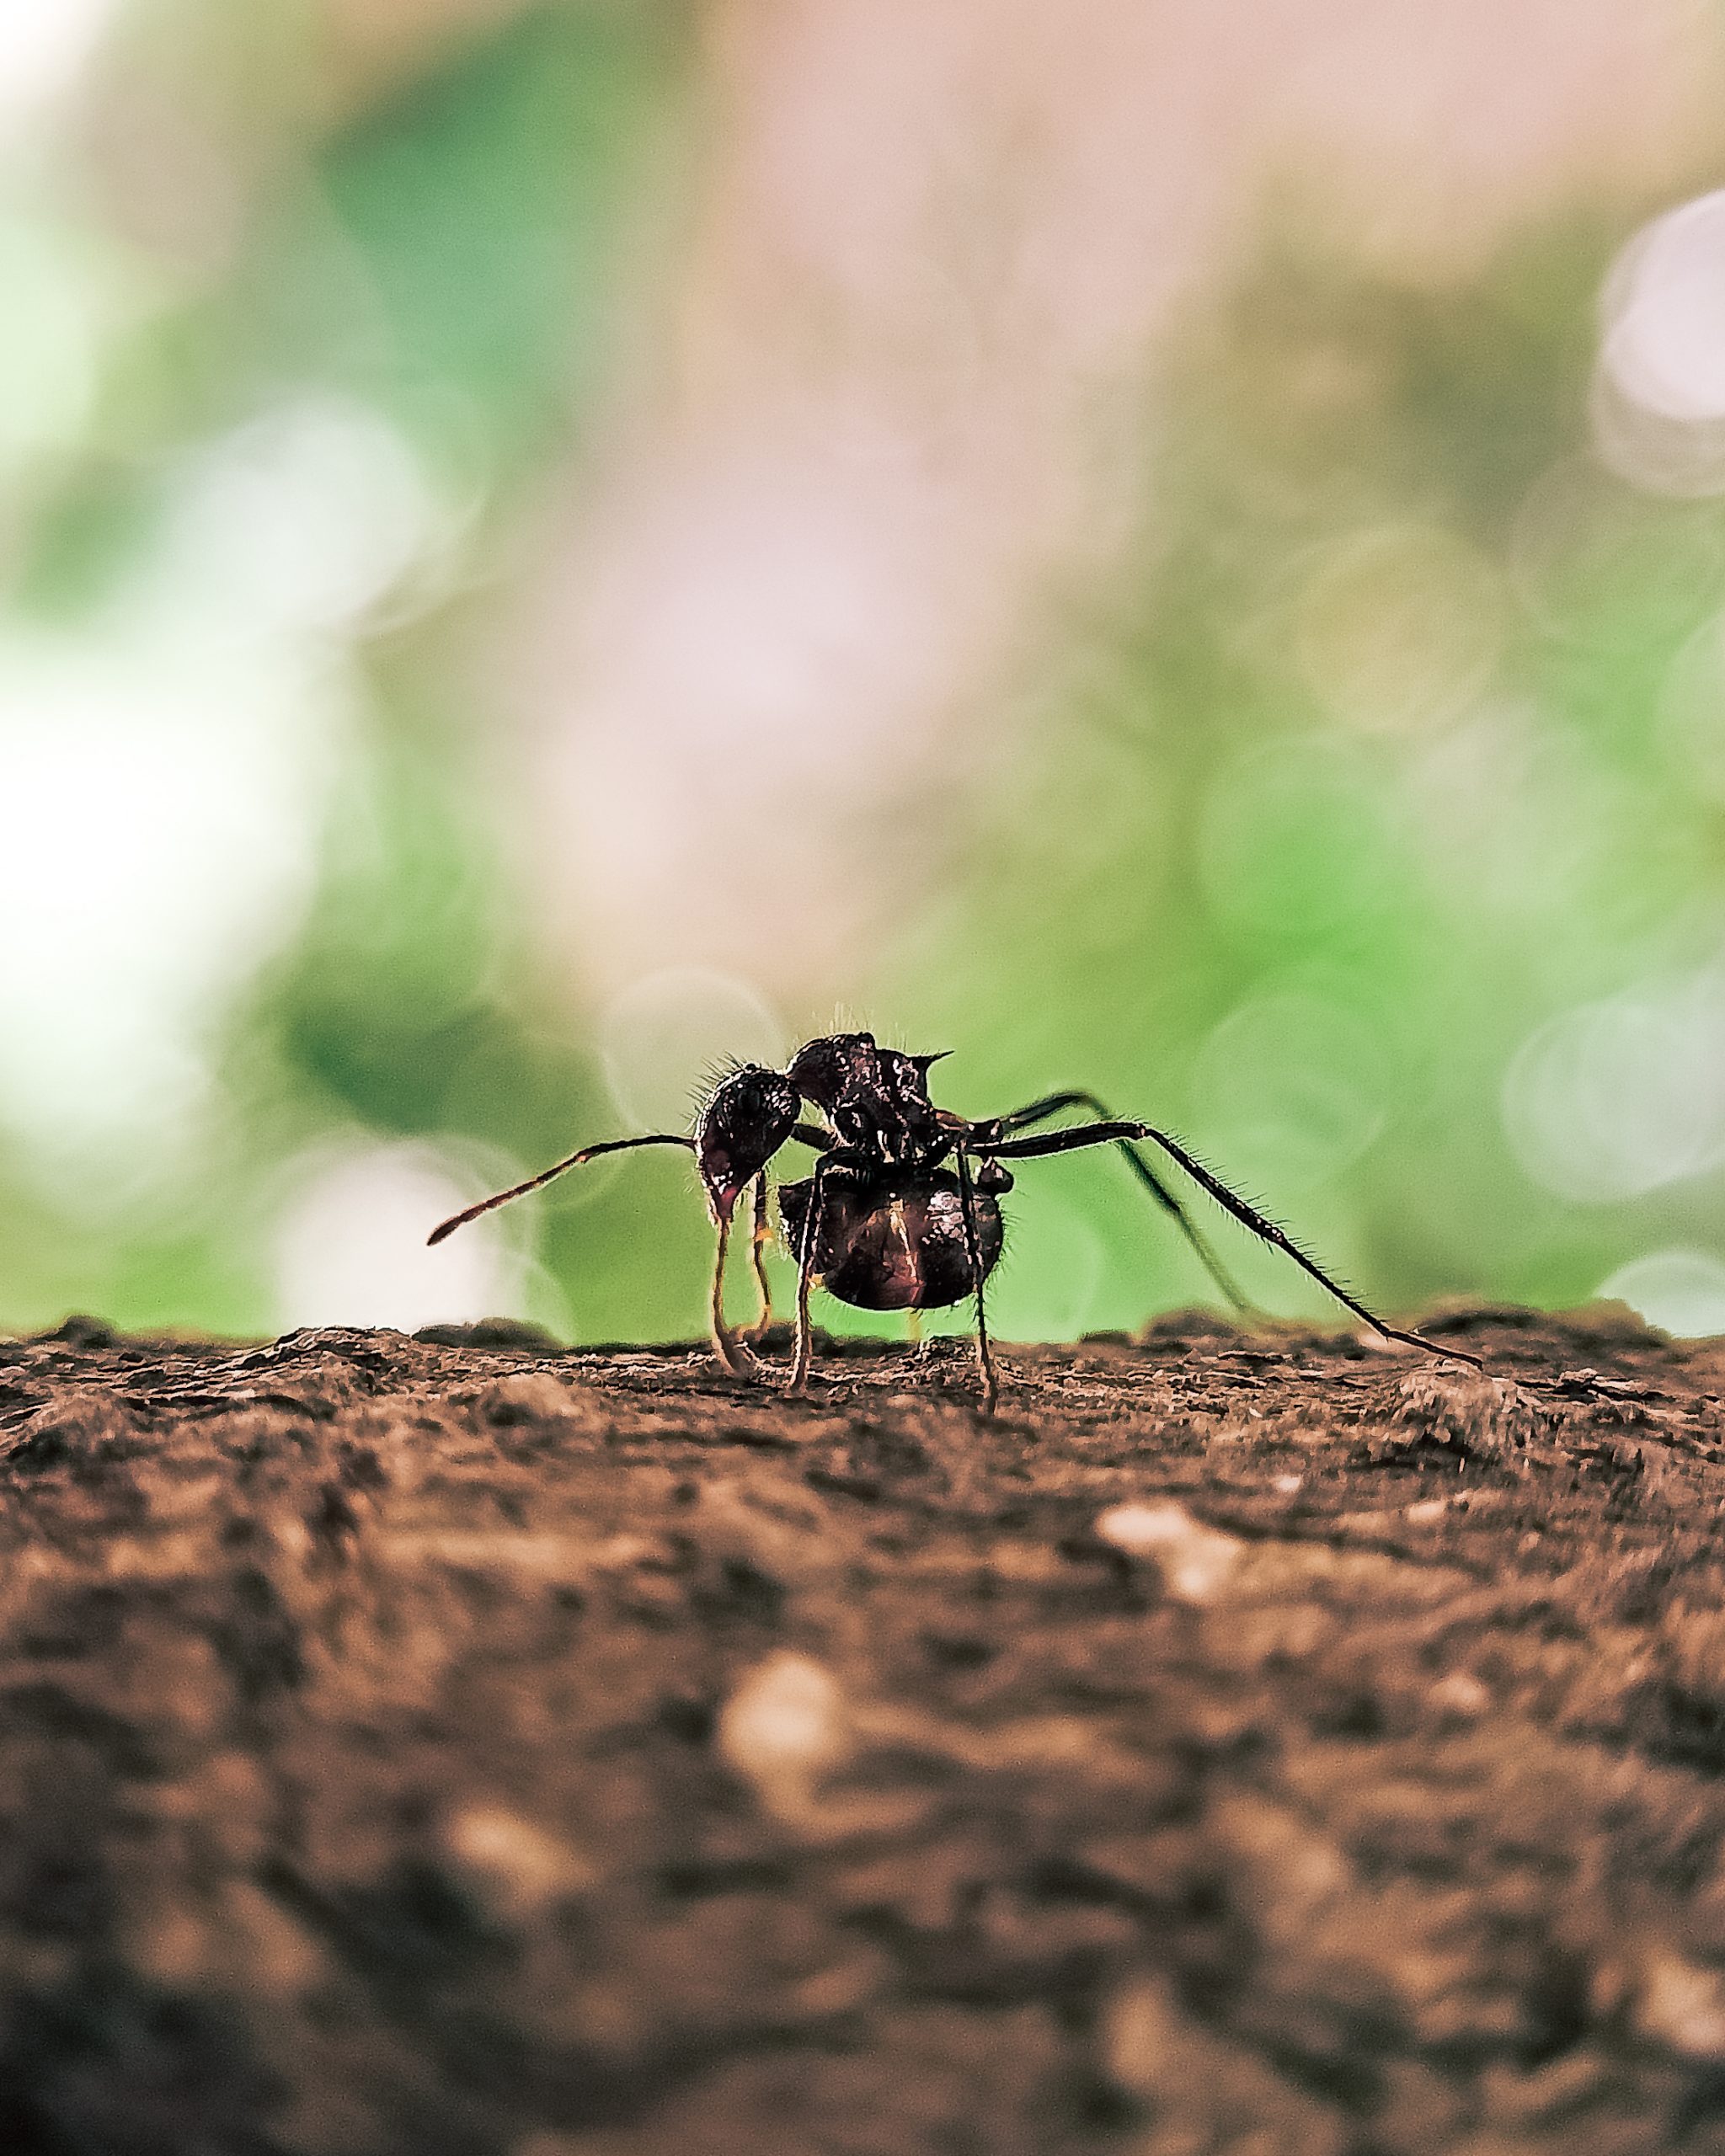 An ant on soil